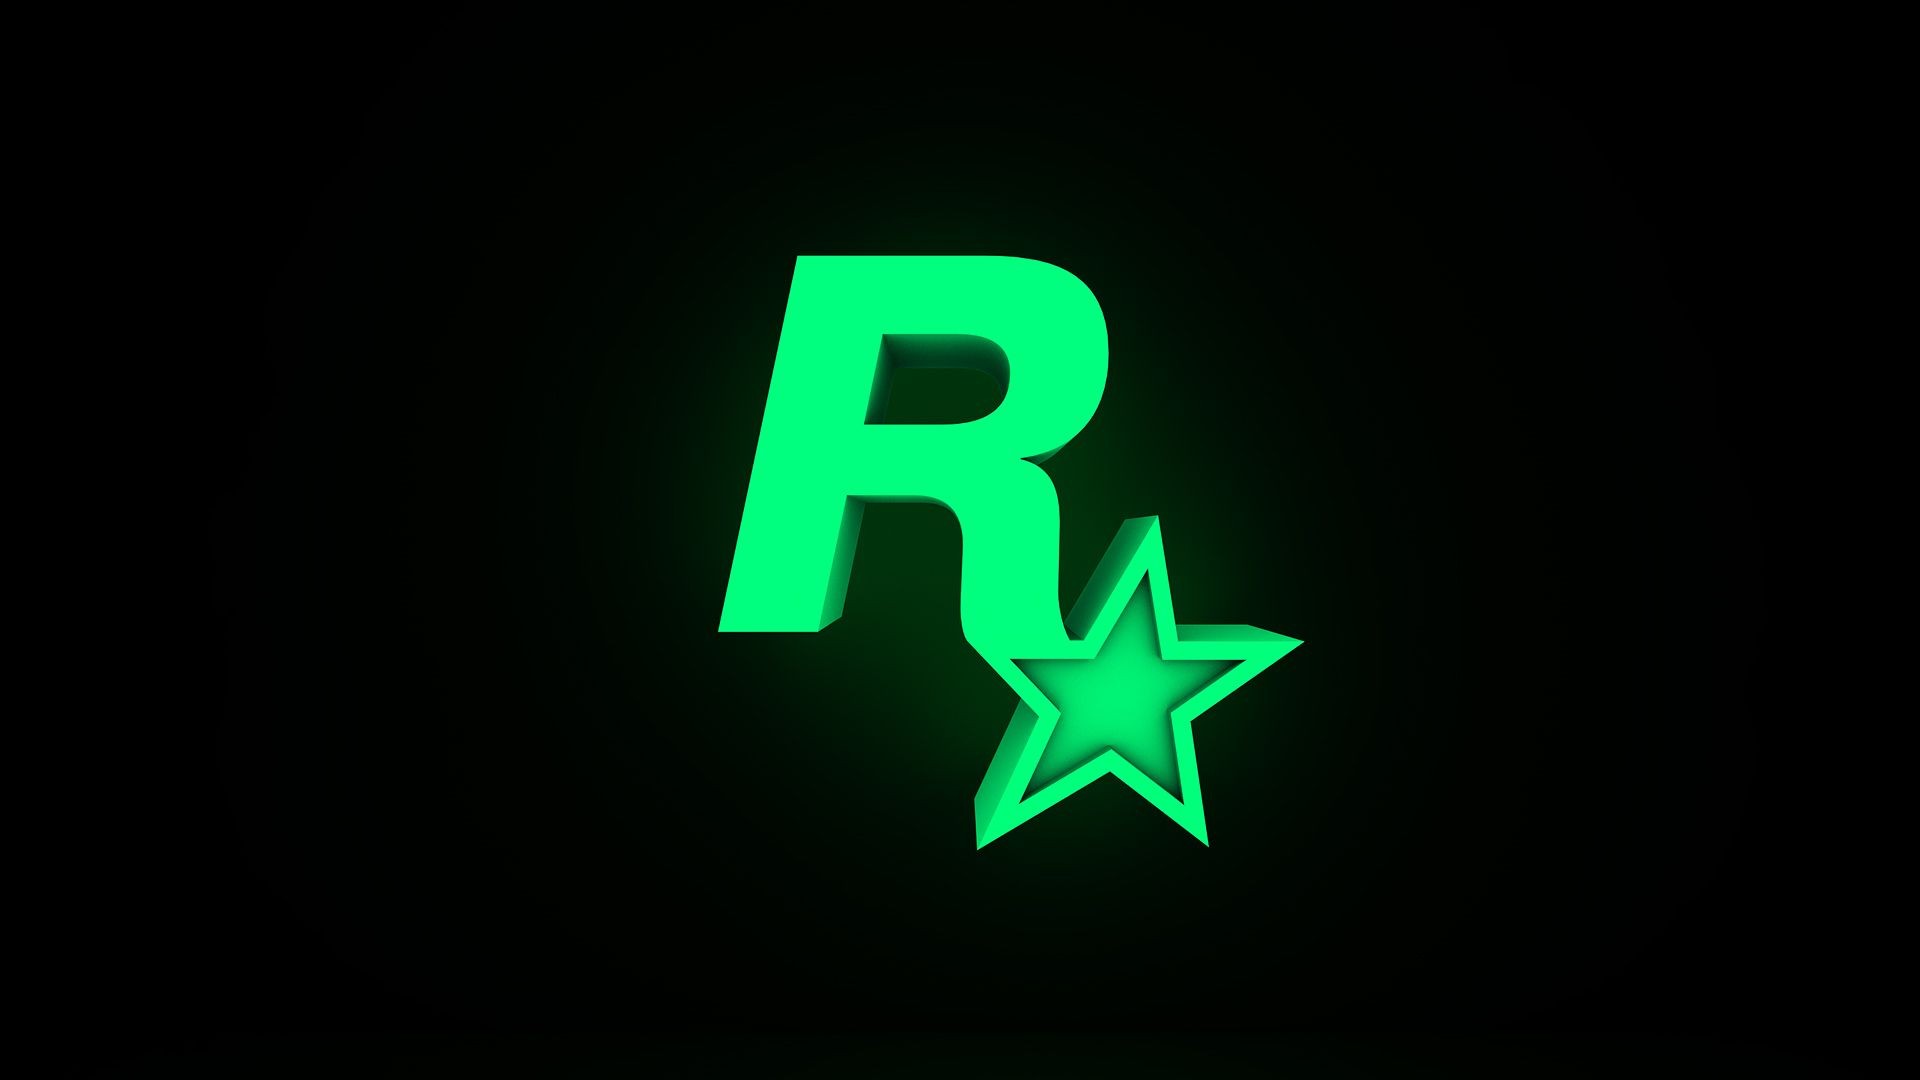 General 1920x1080 Rockstar Games logo video games PC gaming black background green